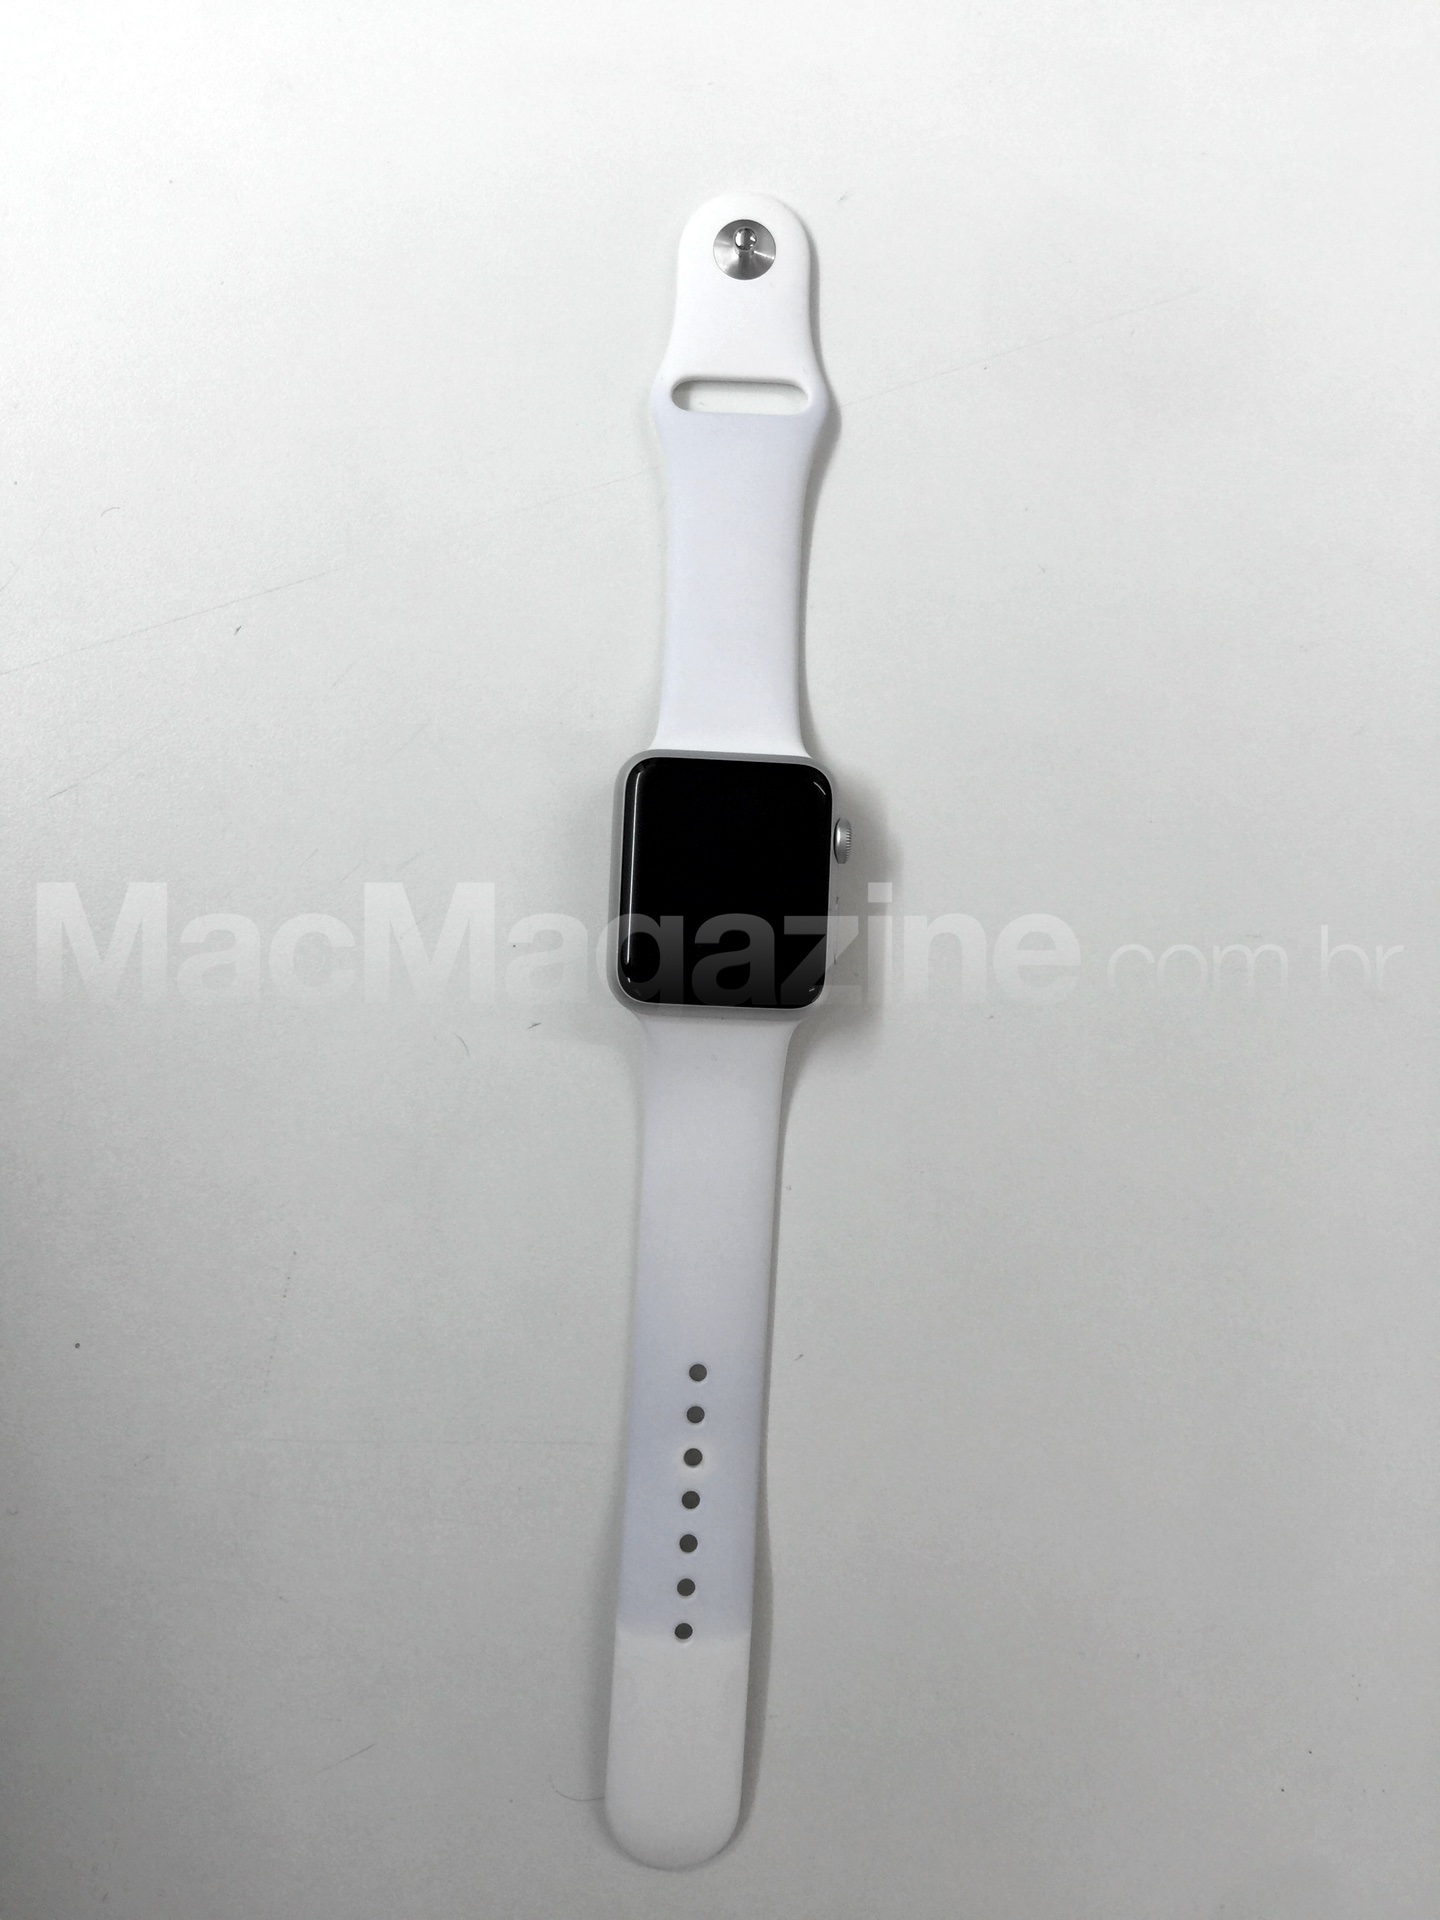 Pulseira do Apple Watch manchada